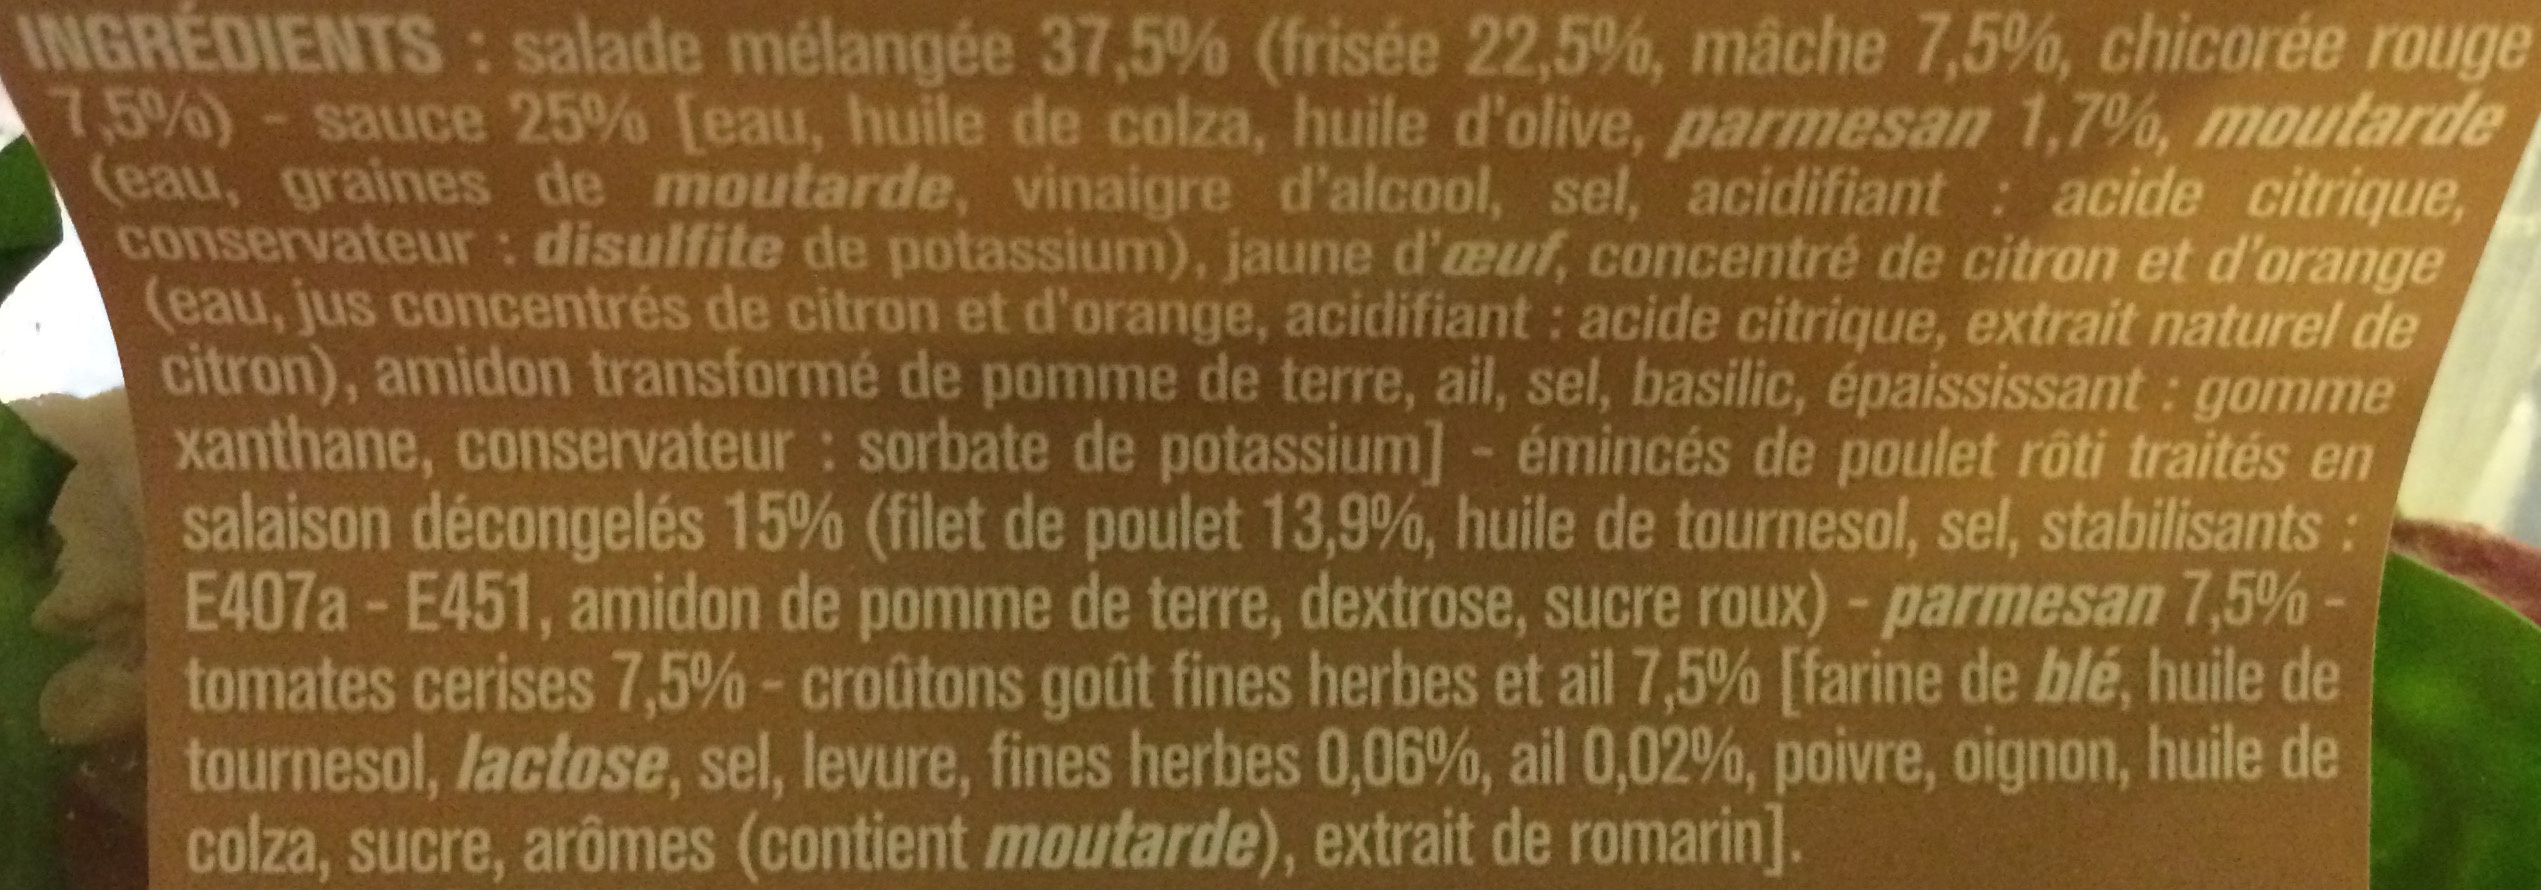 Salade Poulet, Parmesan, Croûtons, Ail et Fines Herbes, Sauce Caesar - Ingrediënten - fr